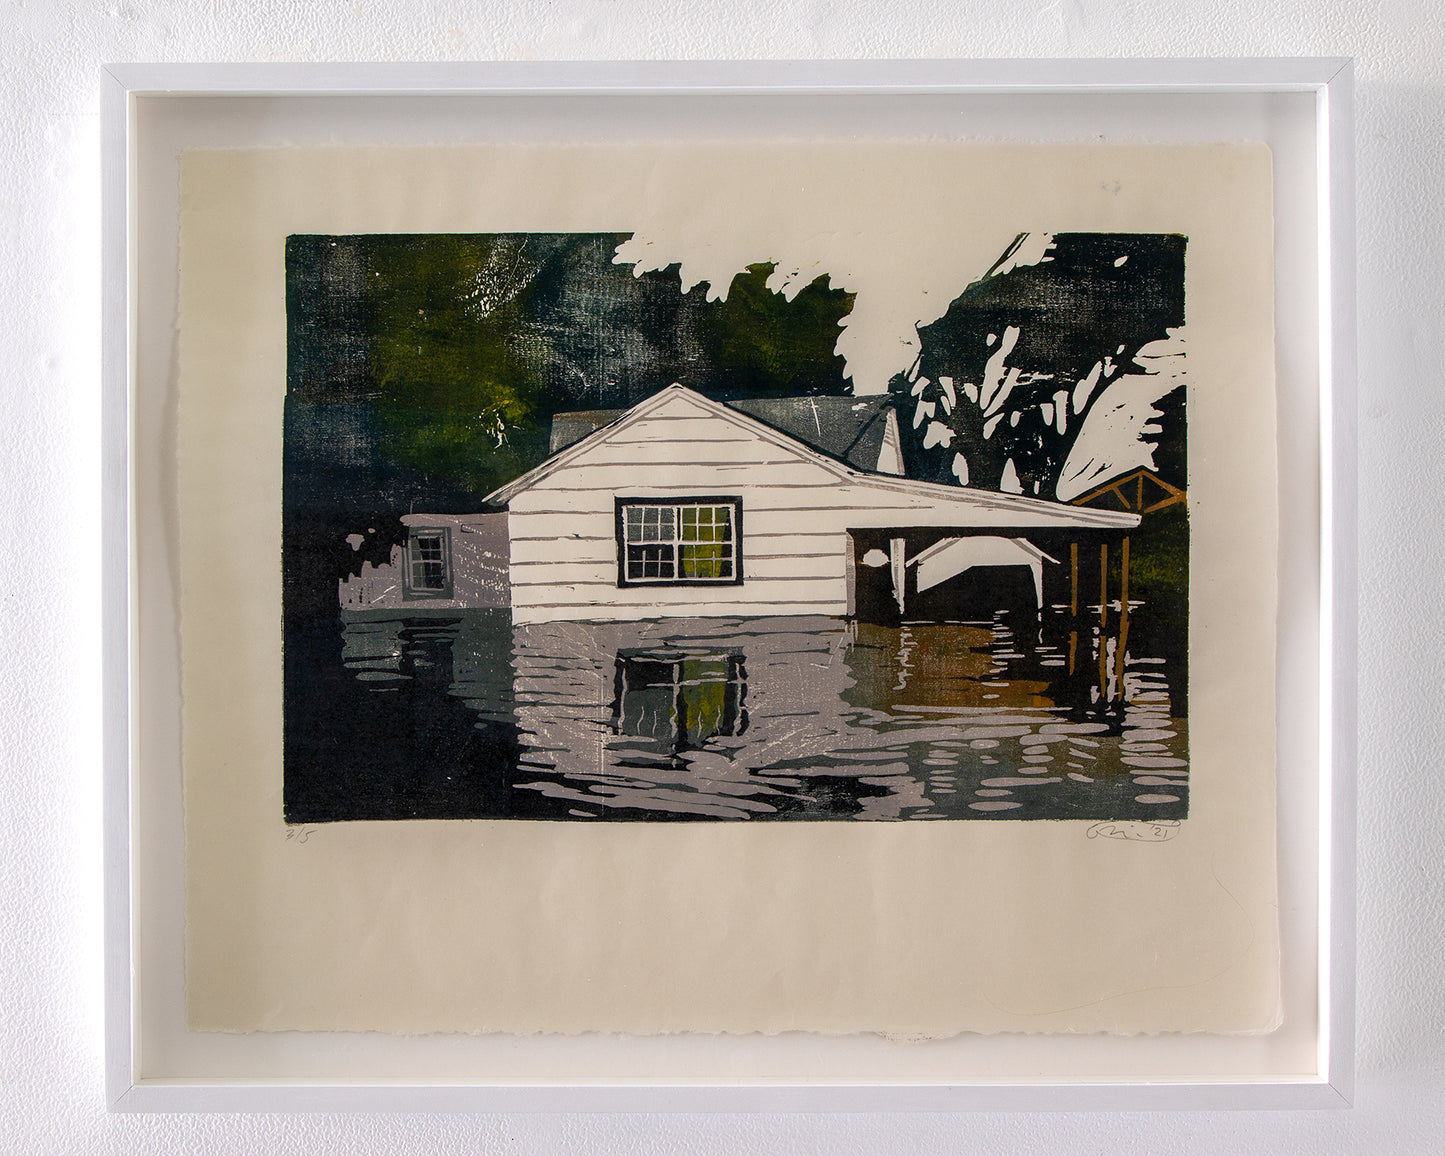 Nina Jordan - Floods and Houses: New Prints